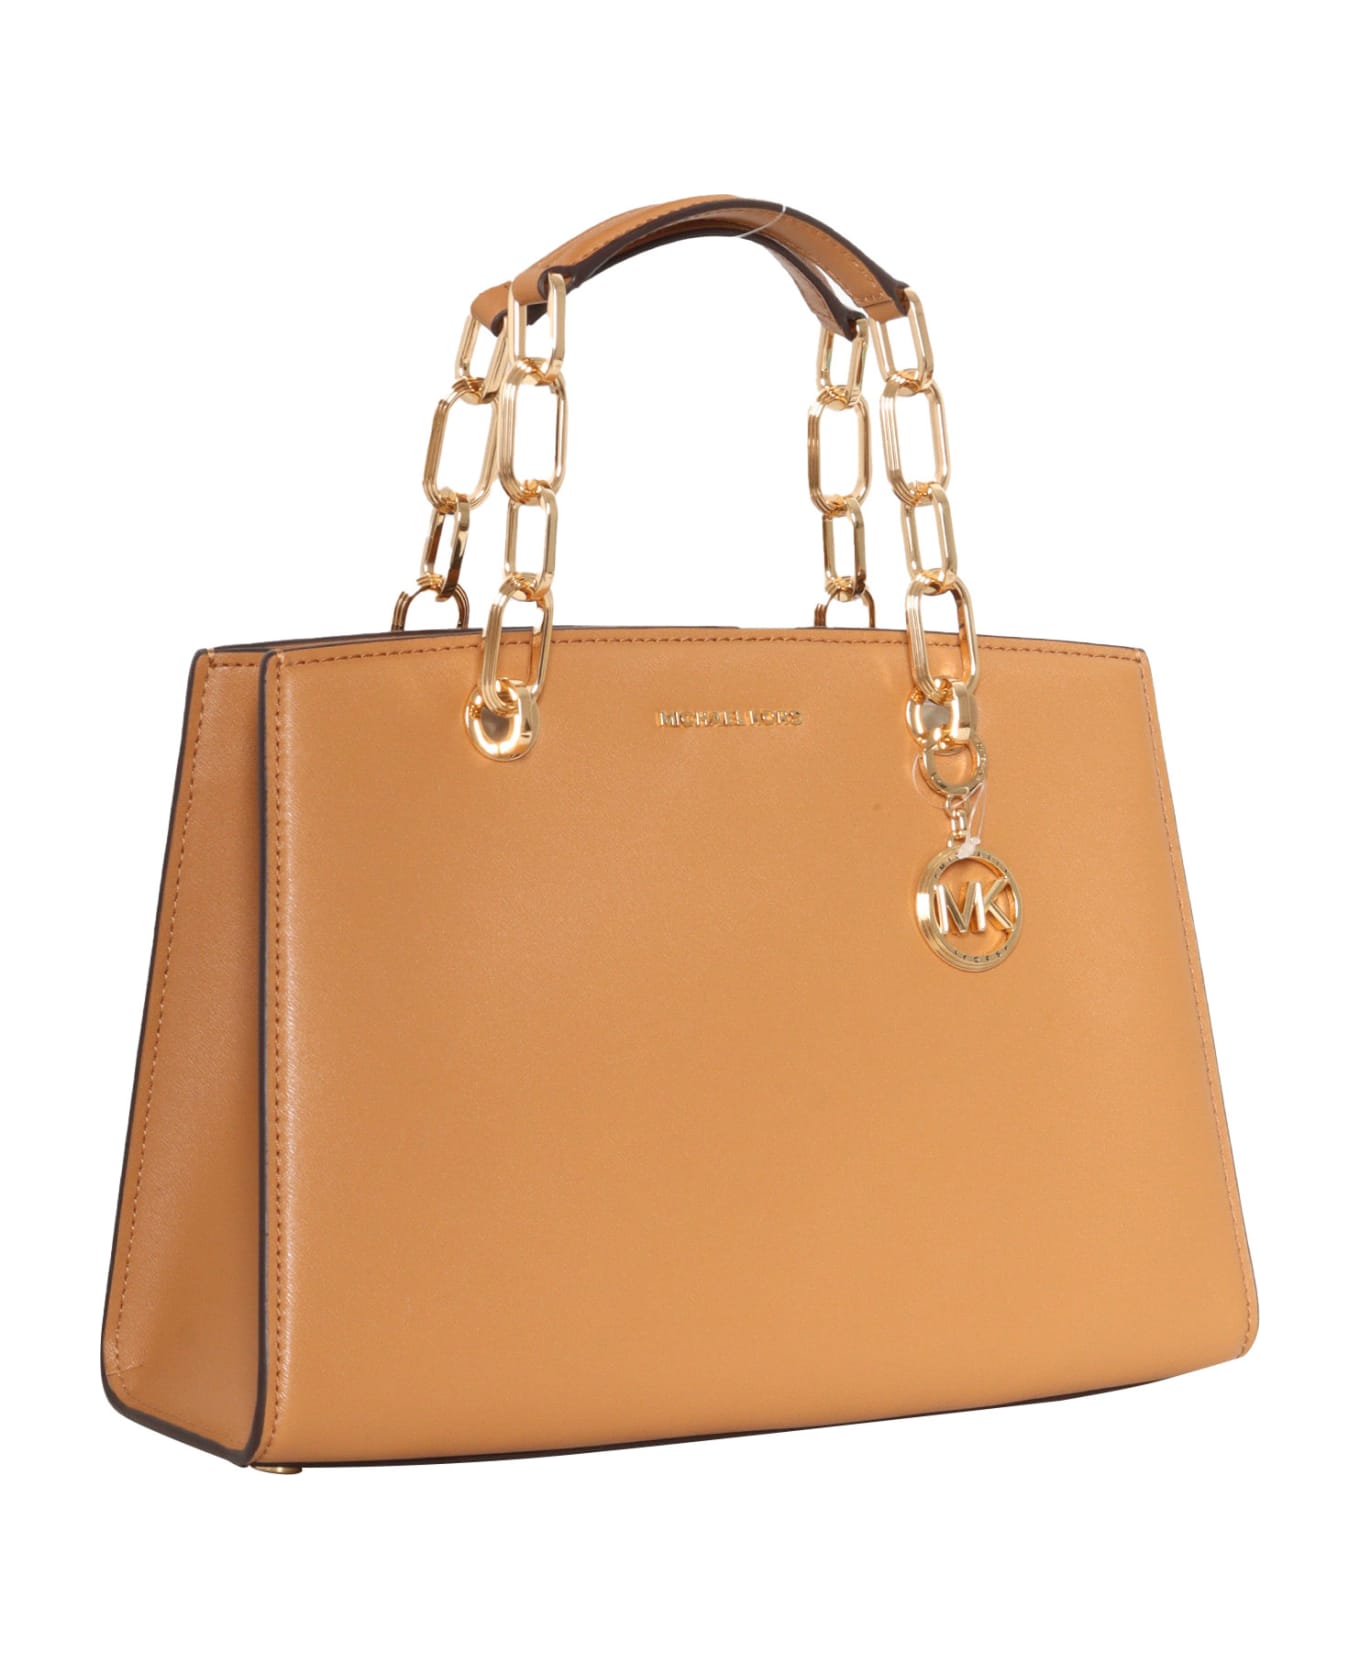 Michael Kors Tan-colored Leather Bag - BEIGE